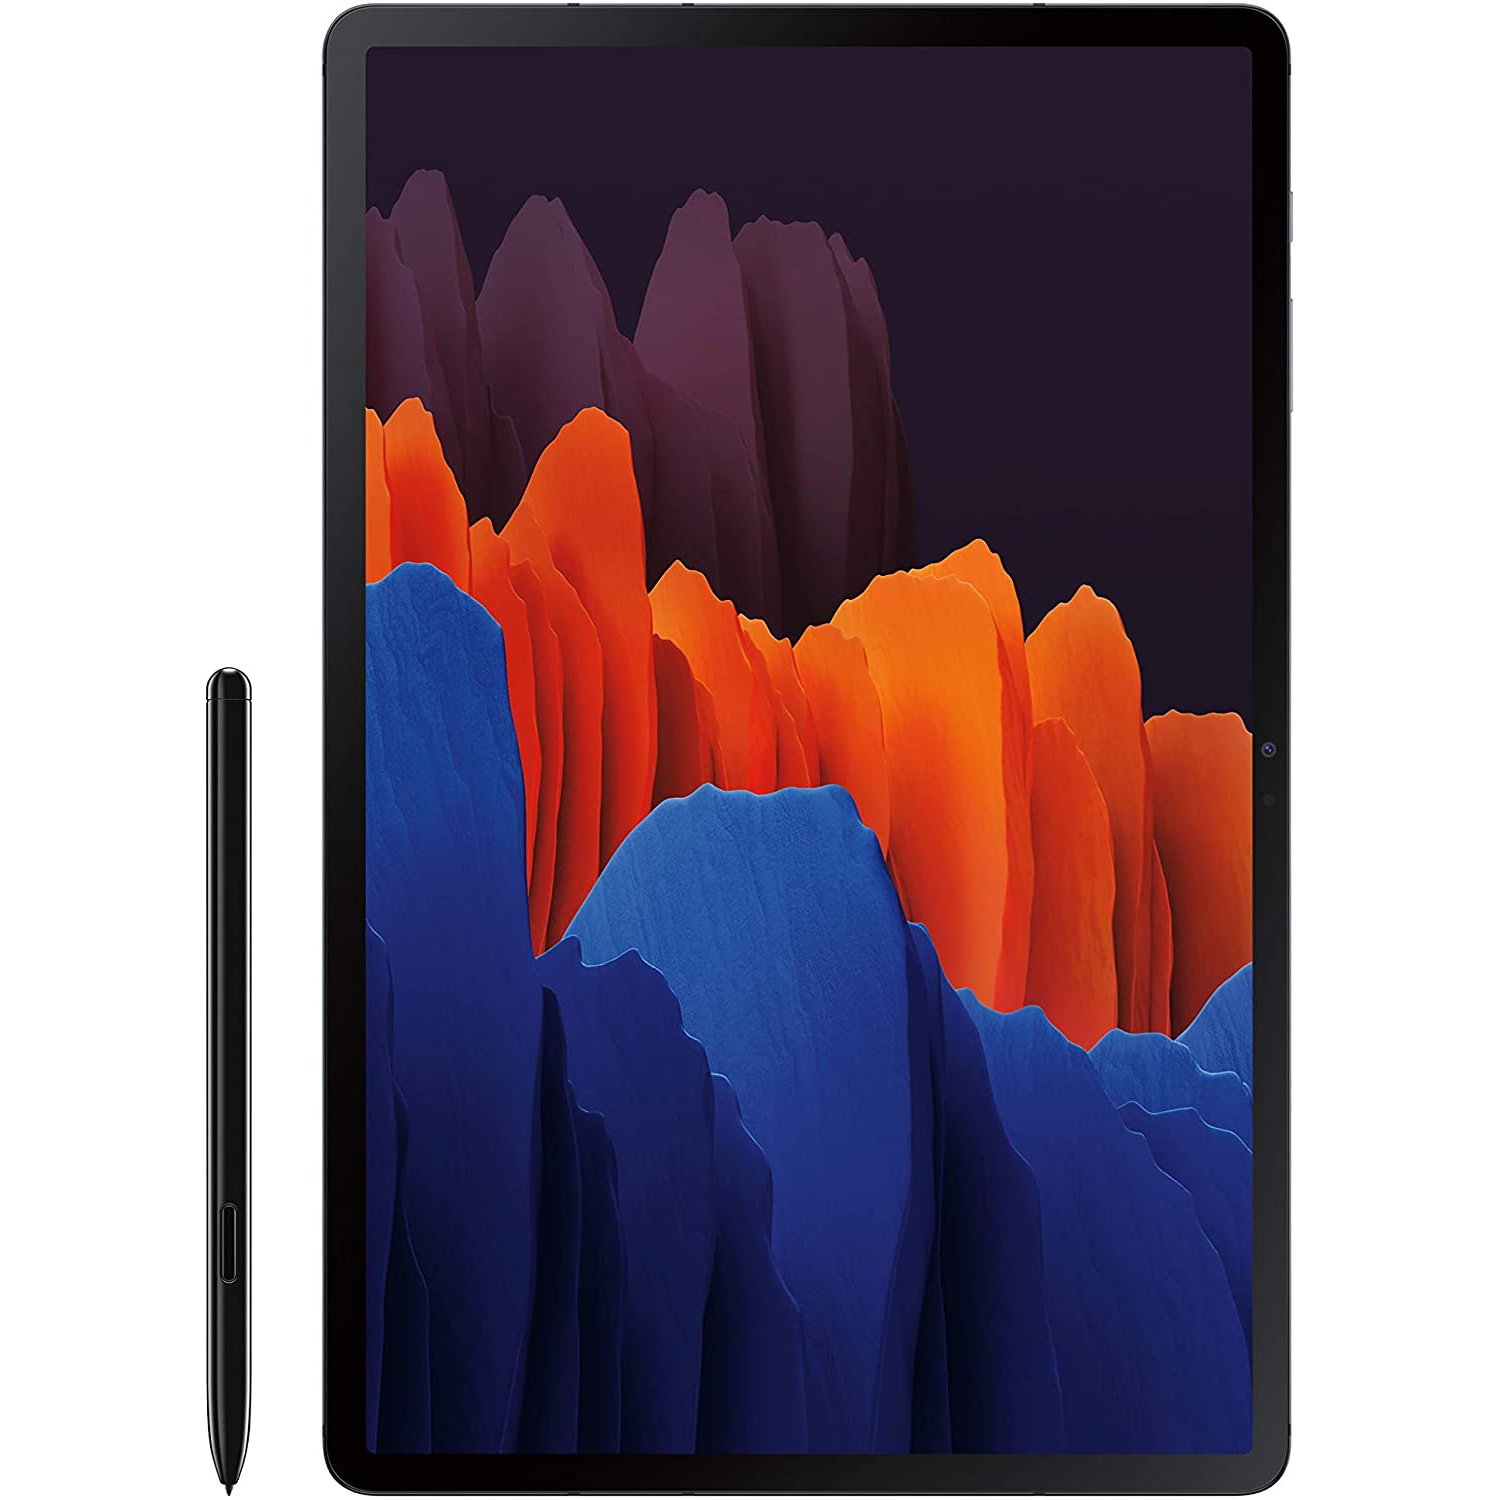 Samsung Galaxy Tab S7 11" 128GB Android Tablet w/ Snapdragon 865 Plus 8-Core Processor - International Model - Mystic Black - Brand New